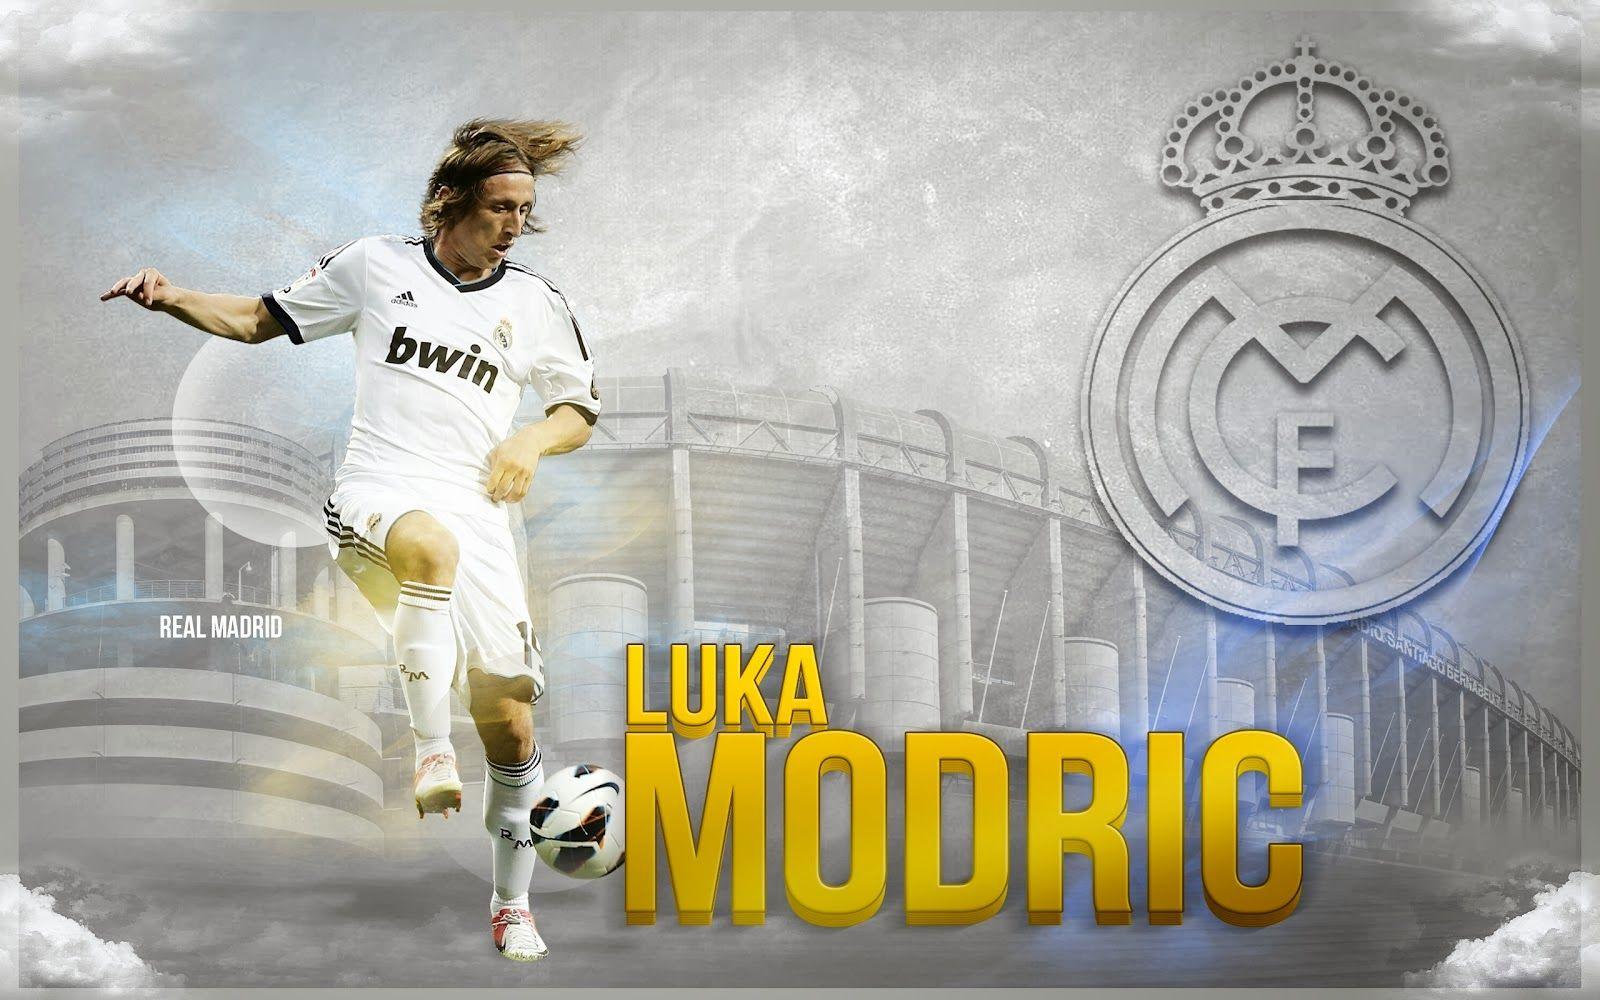 New Luka Modric wallpaper HD Real madrid 2013. Football